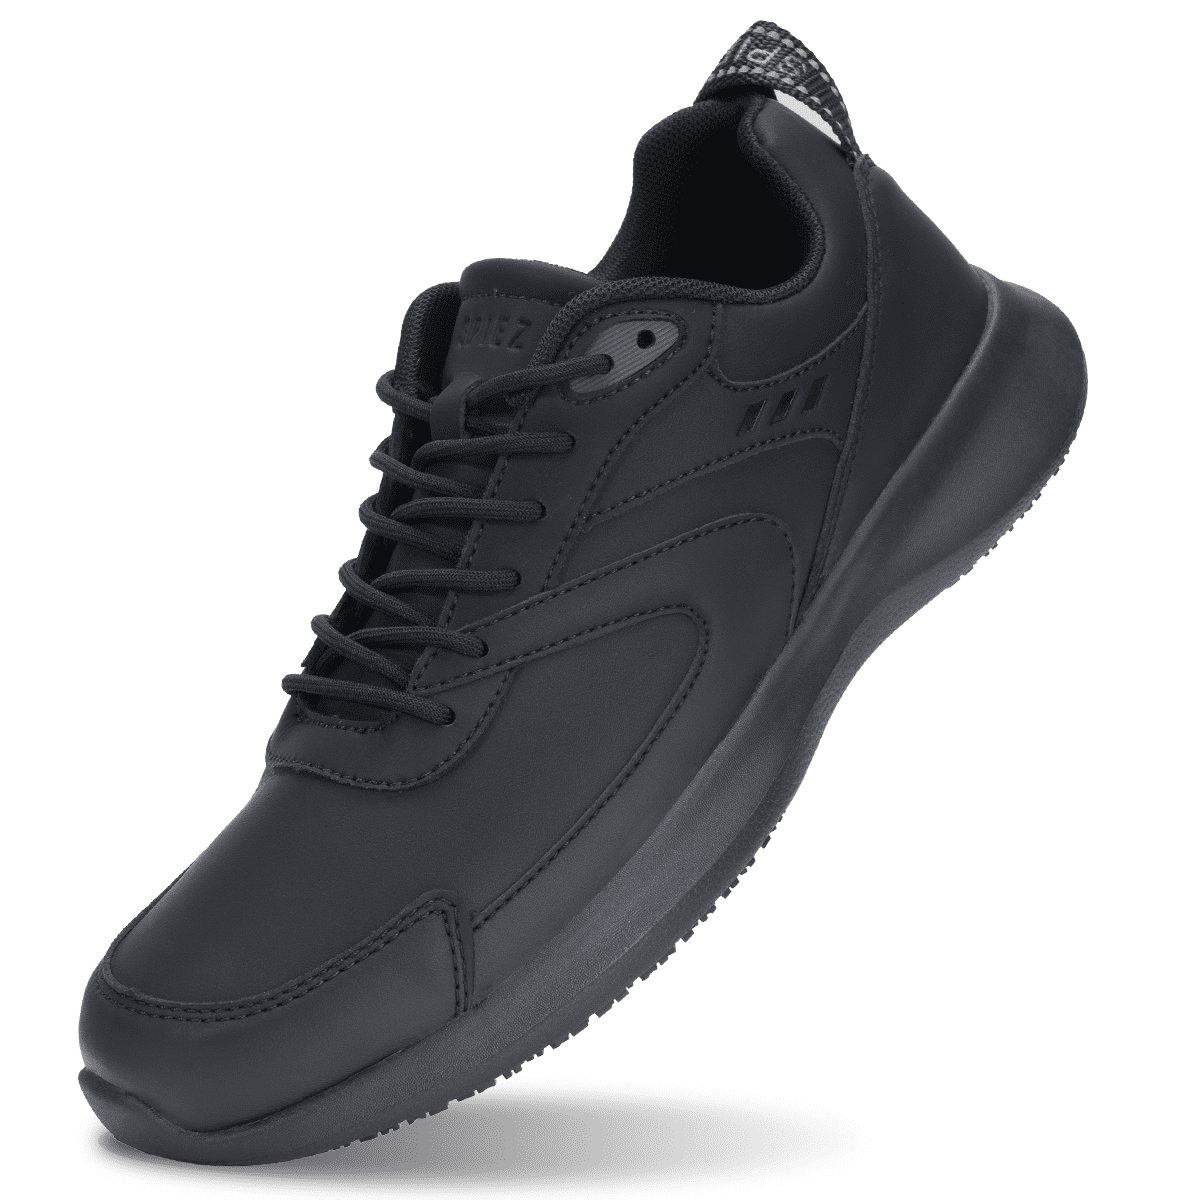 SPIEZ Non Slip Shoes, Waterproof Oilproof Lightweight Slip Resistant Work  Shoes for Men Black, SRC Certification Food Service Shoes 